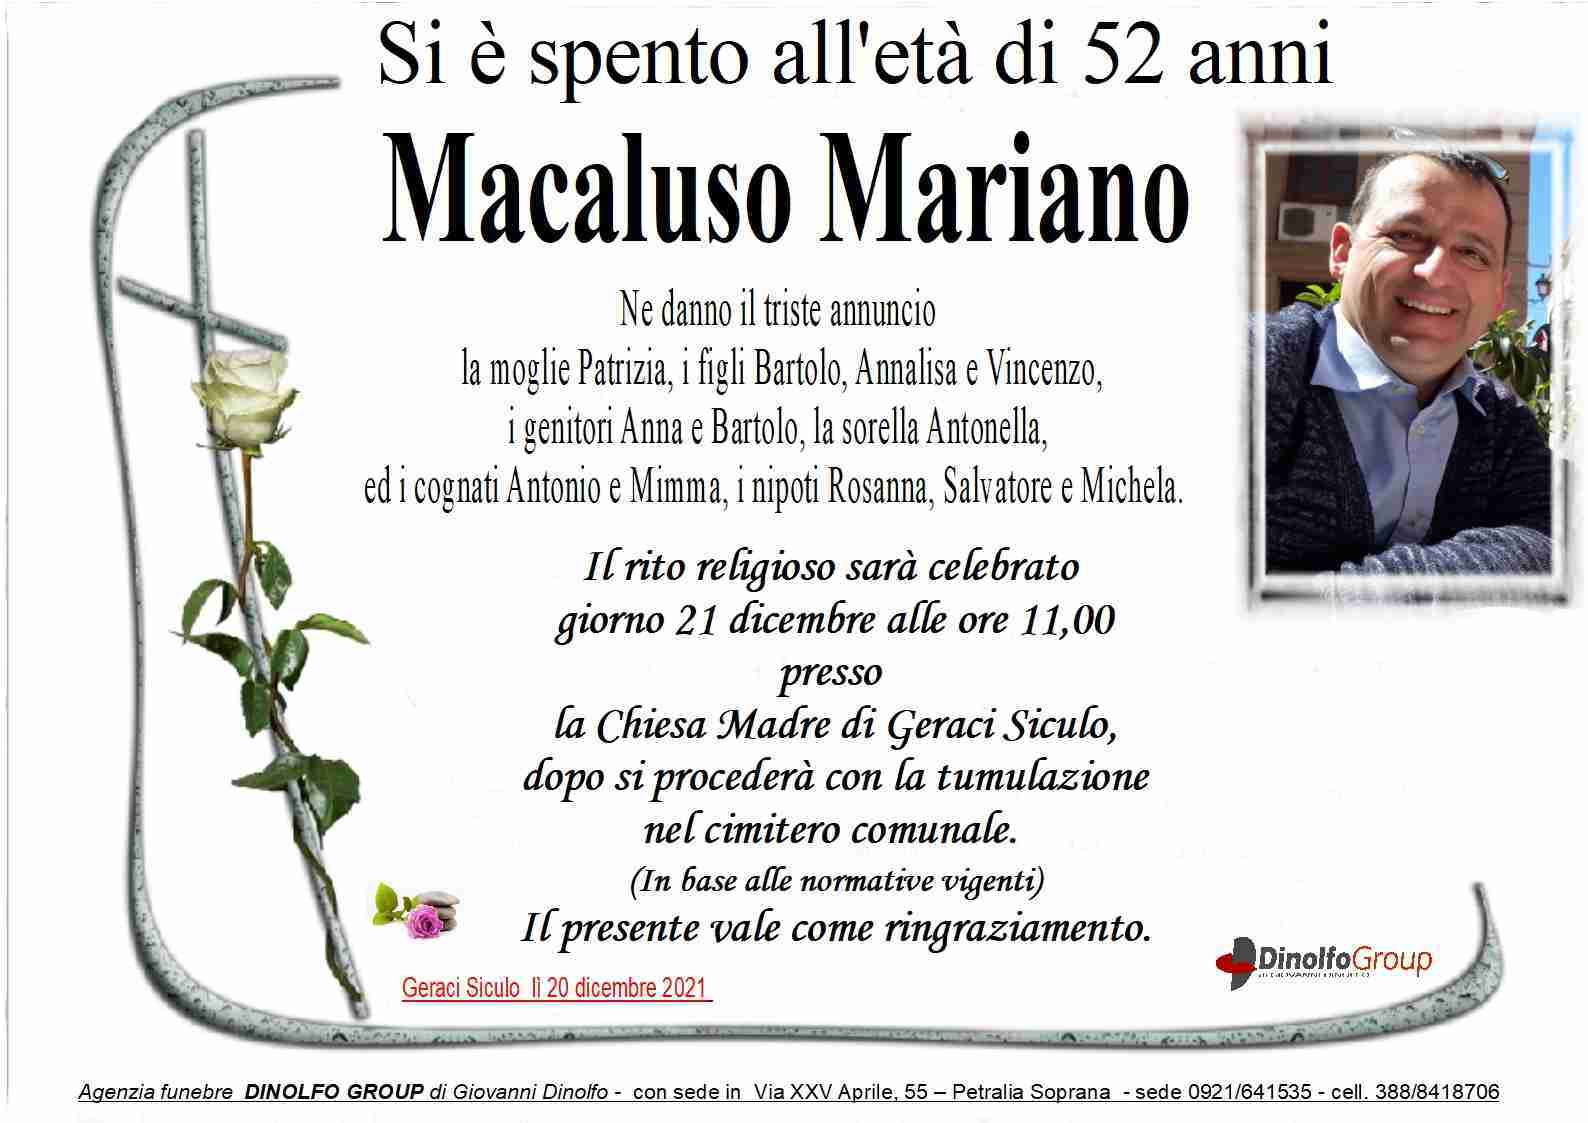 Mariano Macaluso